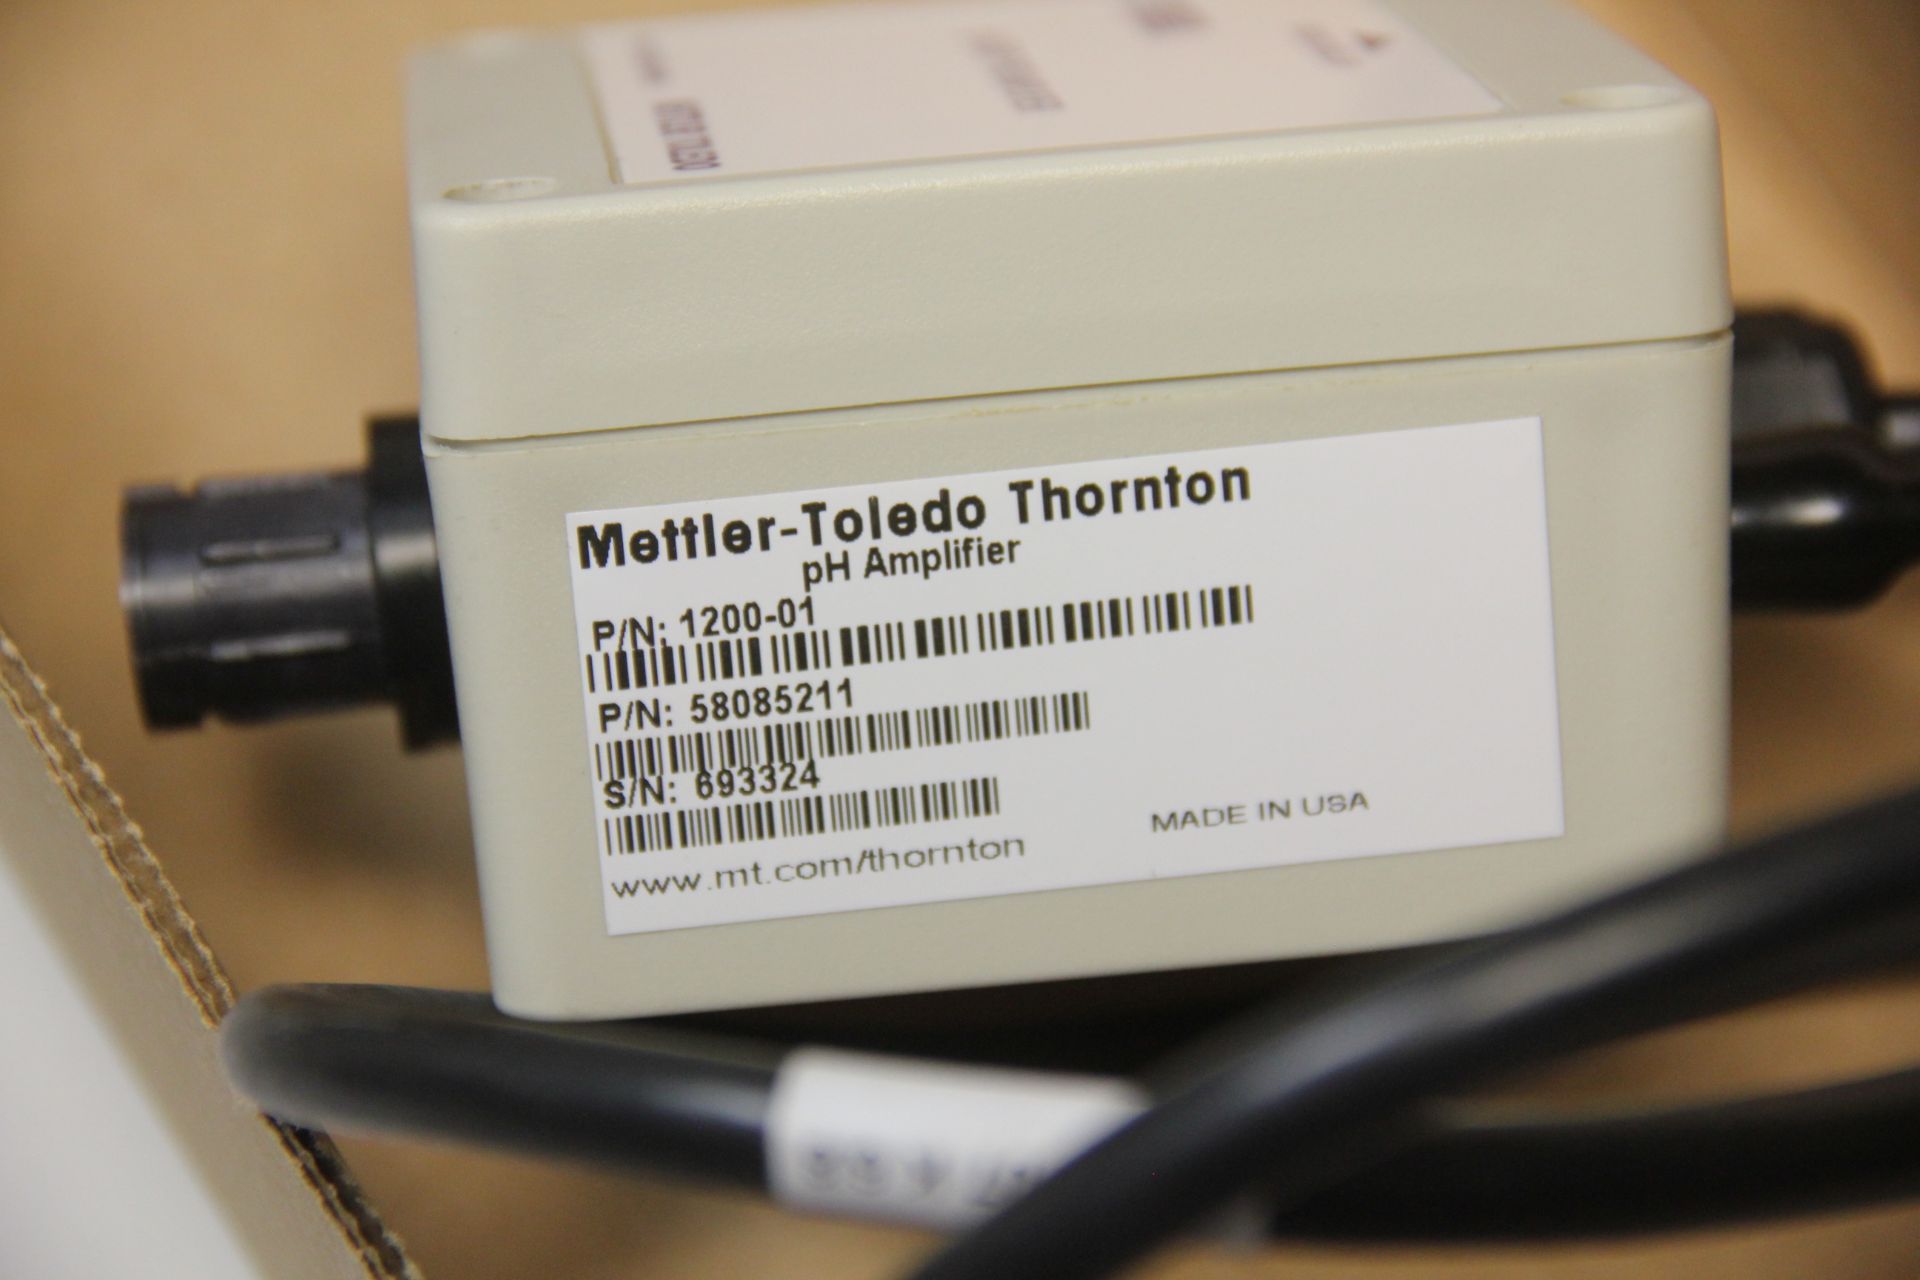 NEW METTLER TOLEDO THORNTON PH/ORP PREAMPLIFIER - Image 6 of 6